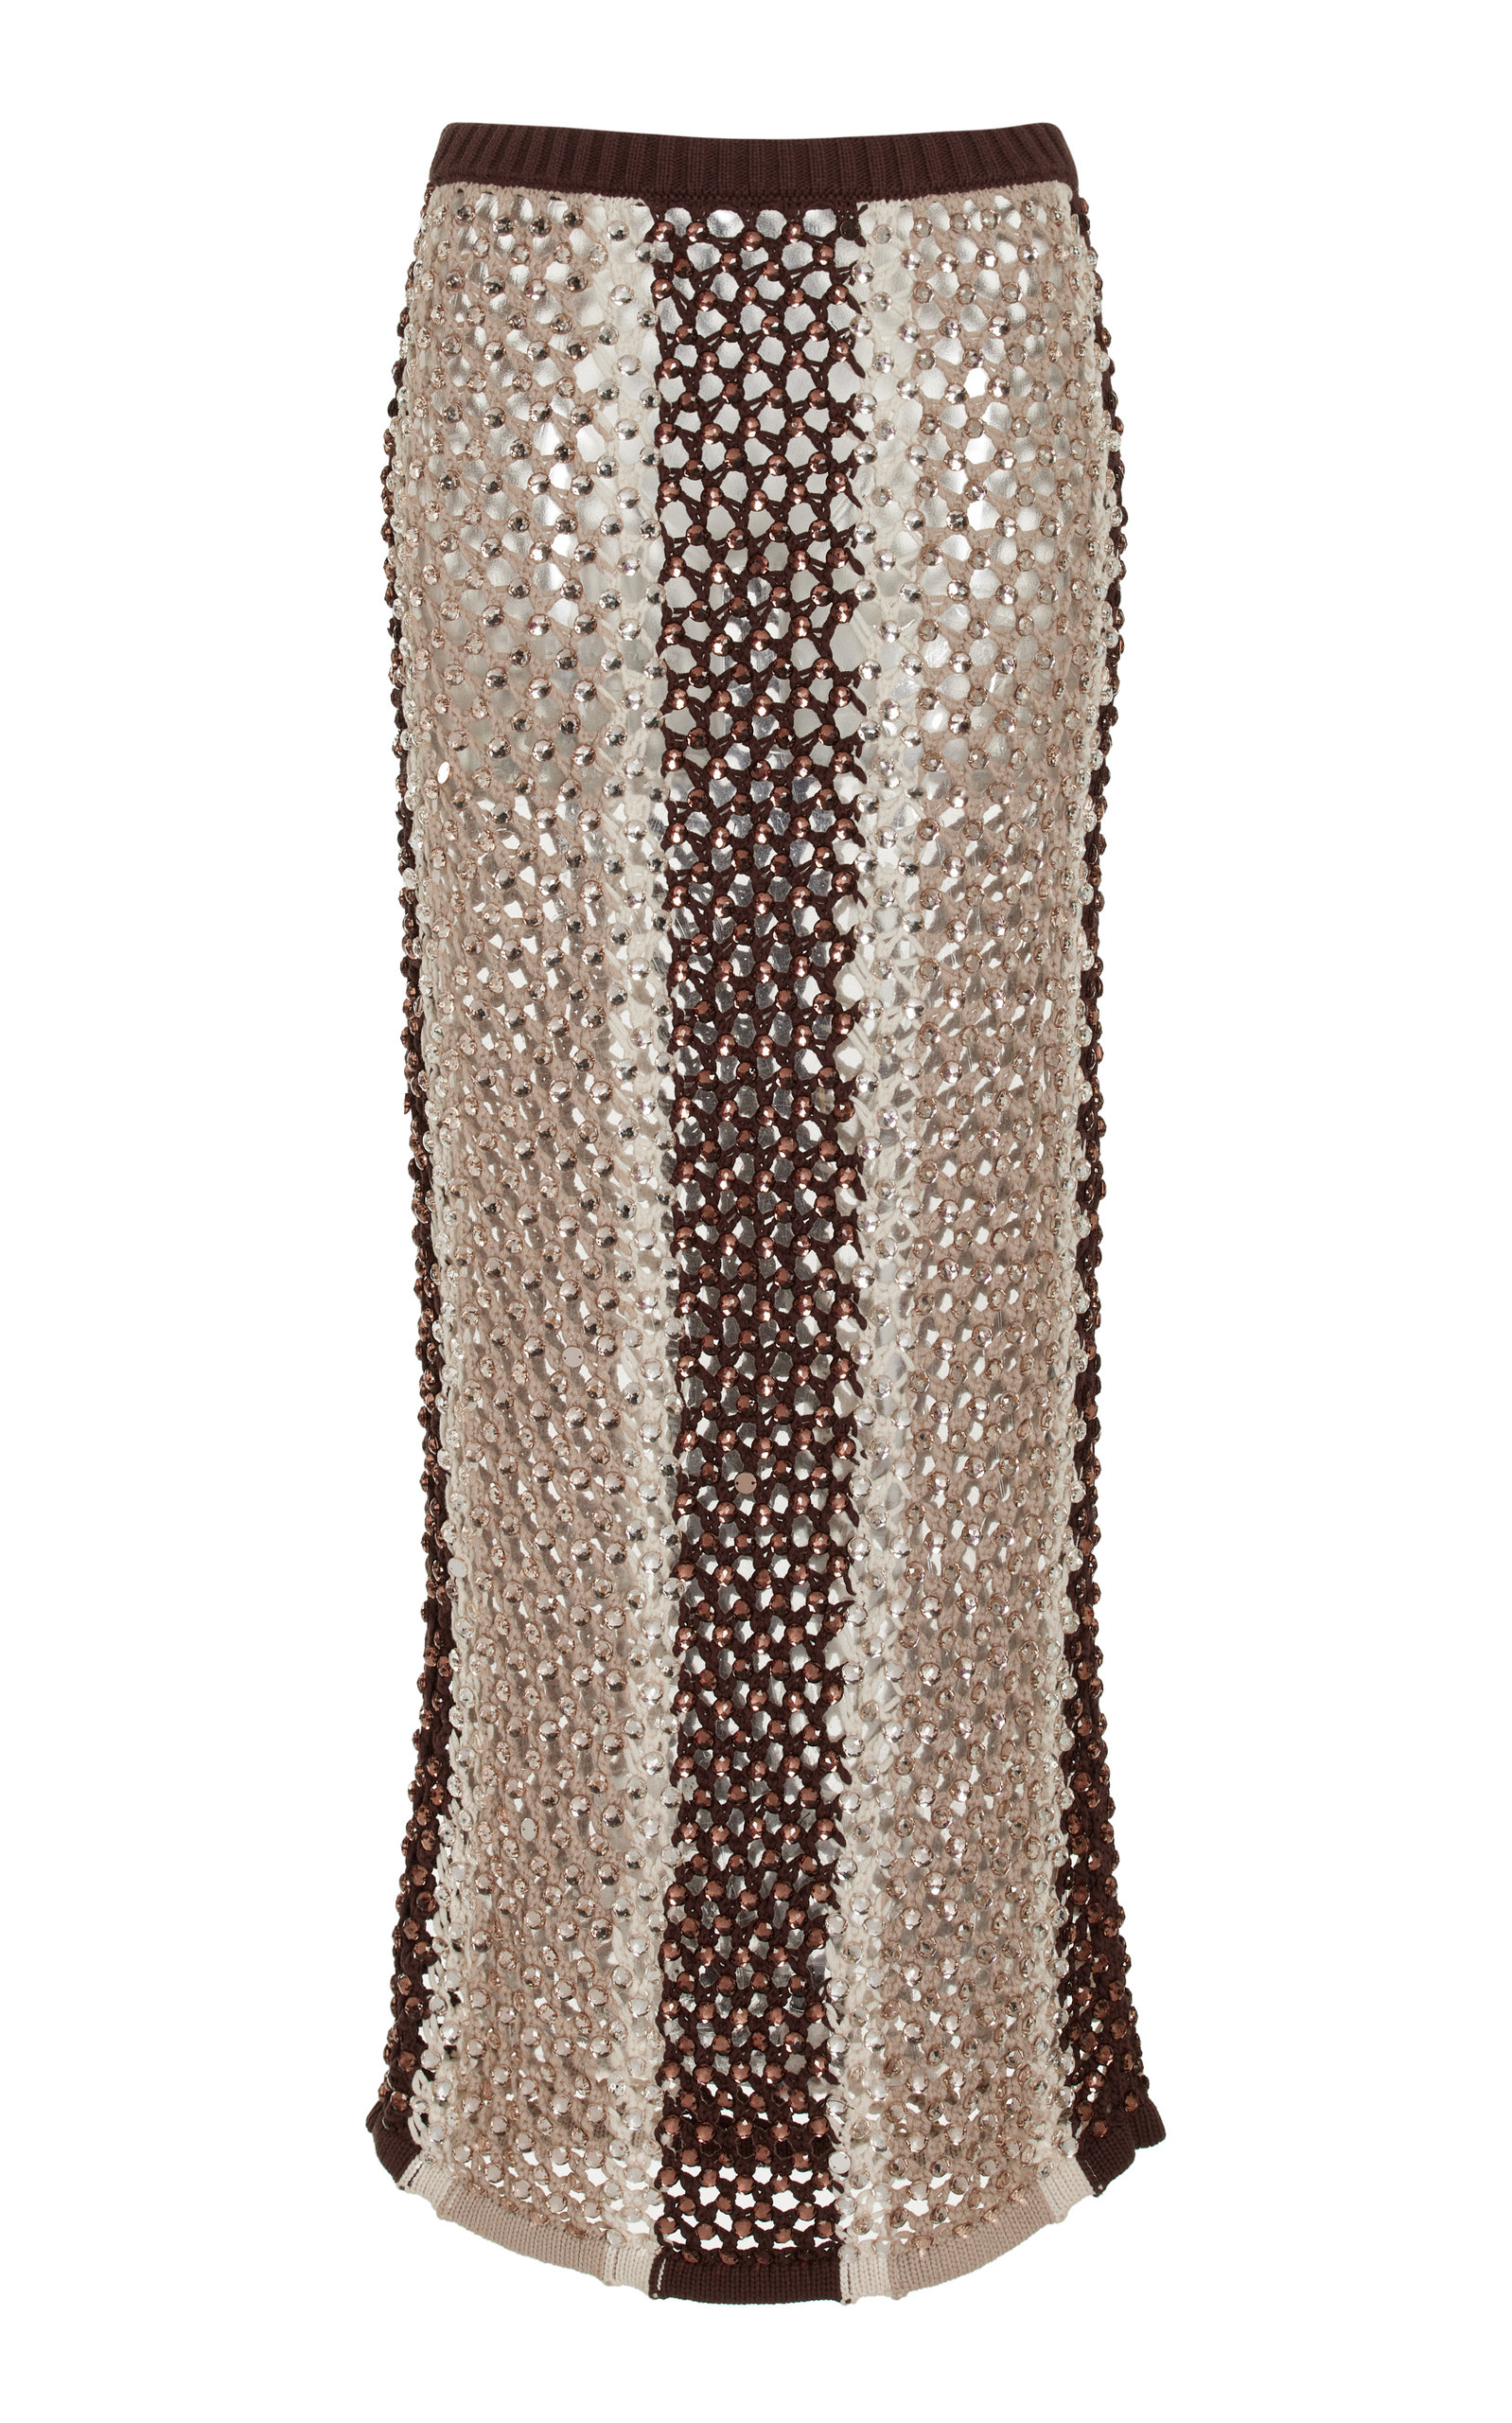 Diotima Women's Spice Crystal Adorned Cotton-Blend Knit Skirt